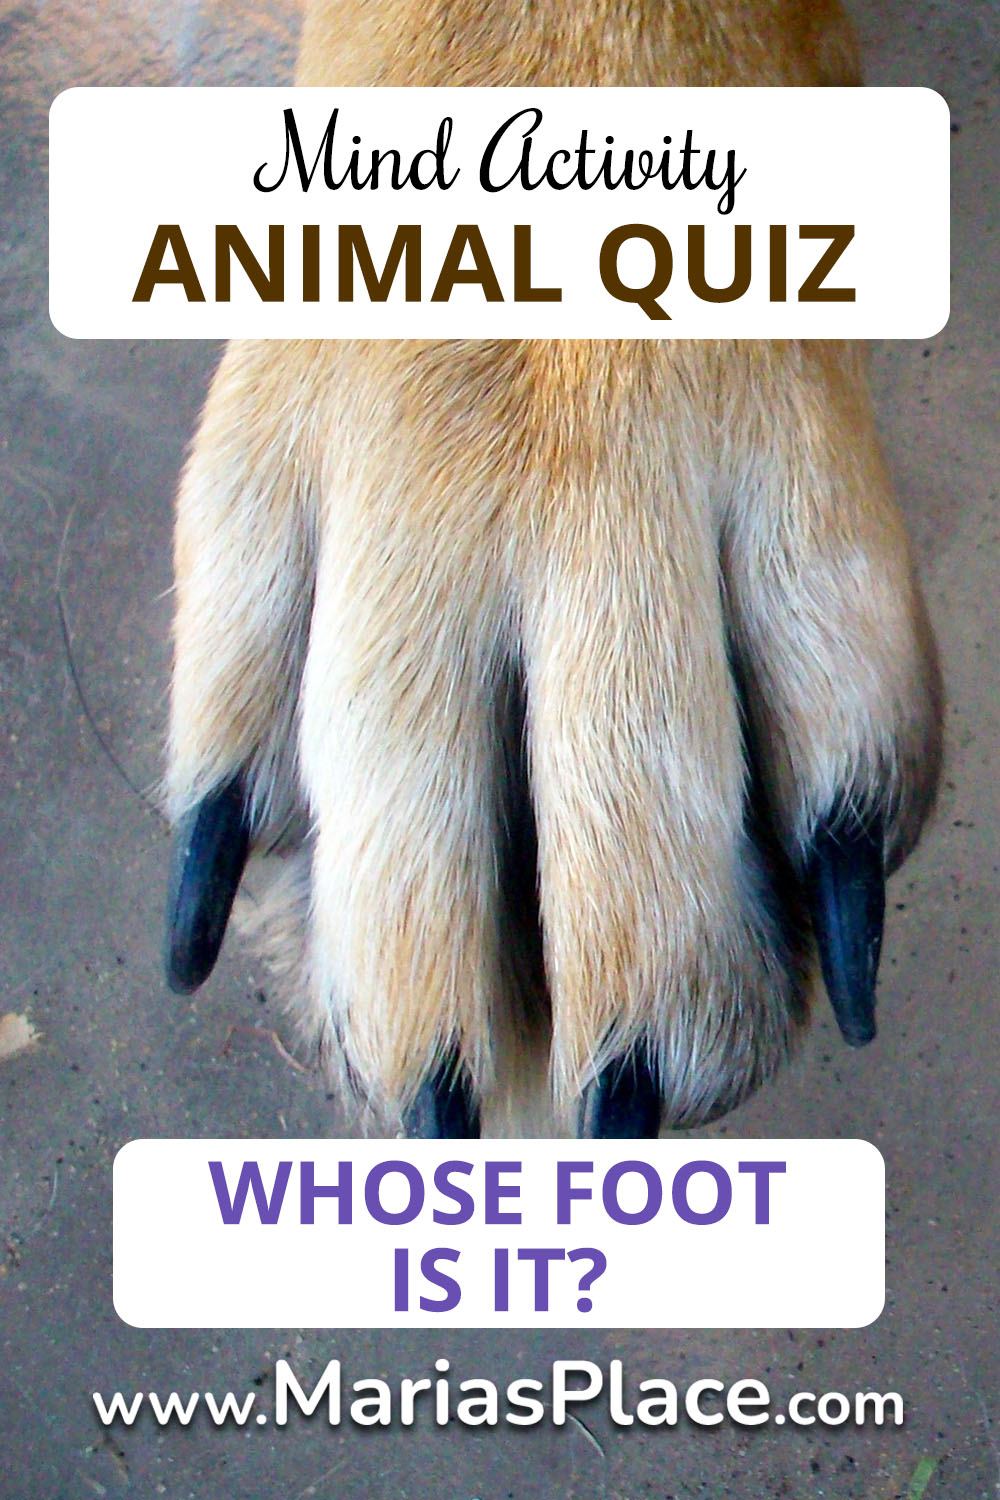 Whose Foot is It? Easy Animal Quiz.